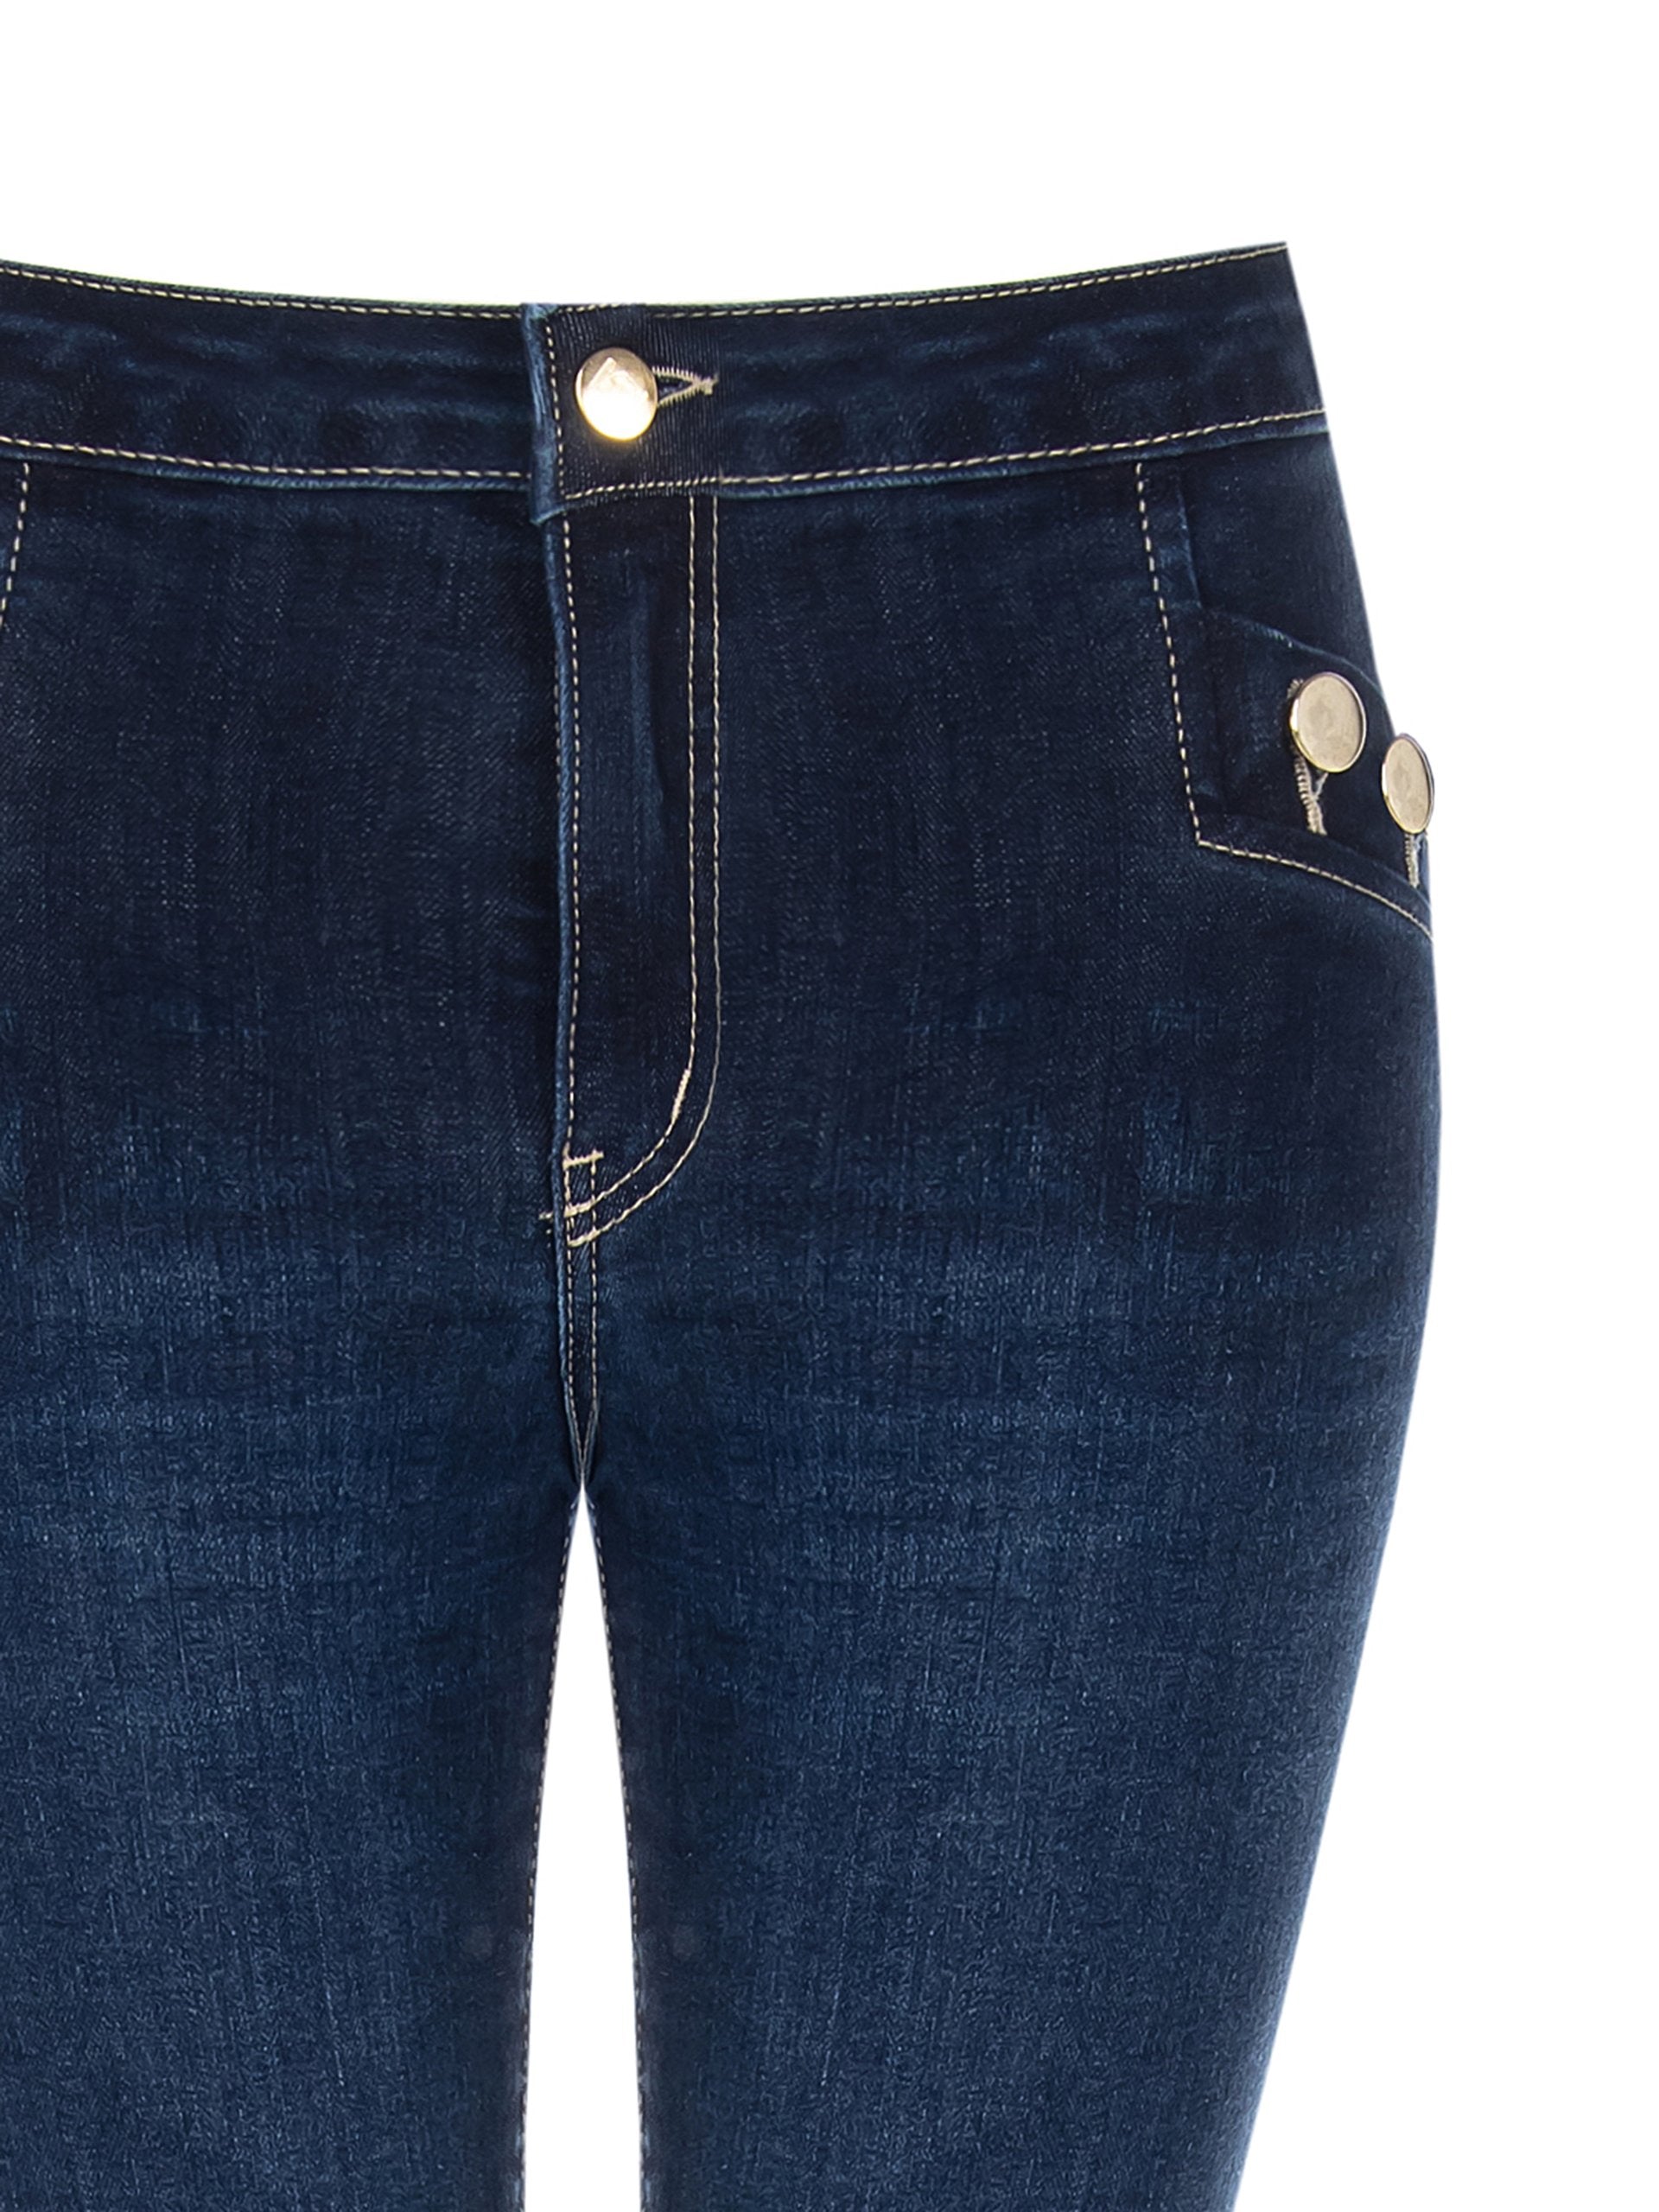 Jeans Skinny con Bottoni Dorati Rinascimento